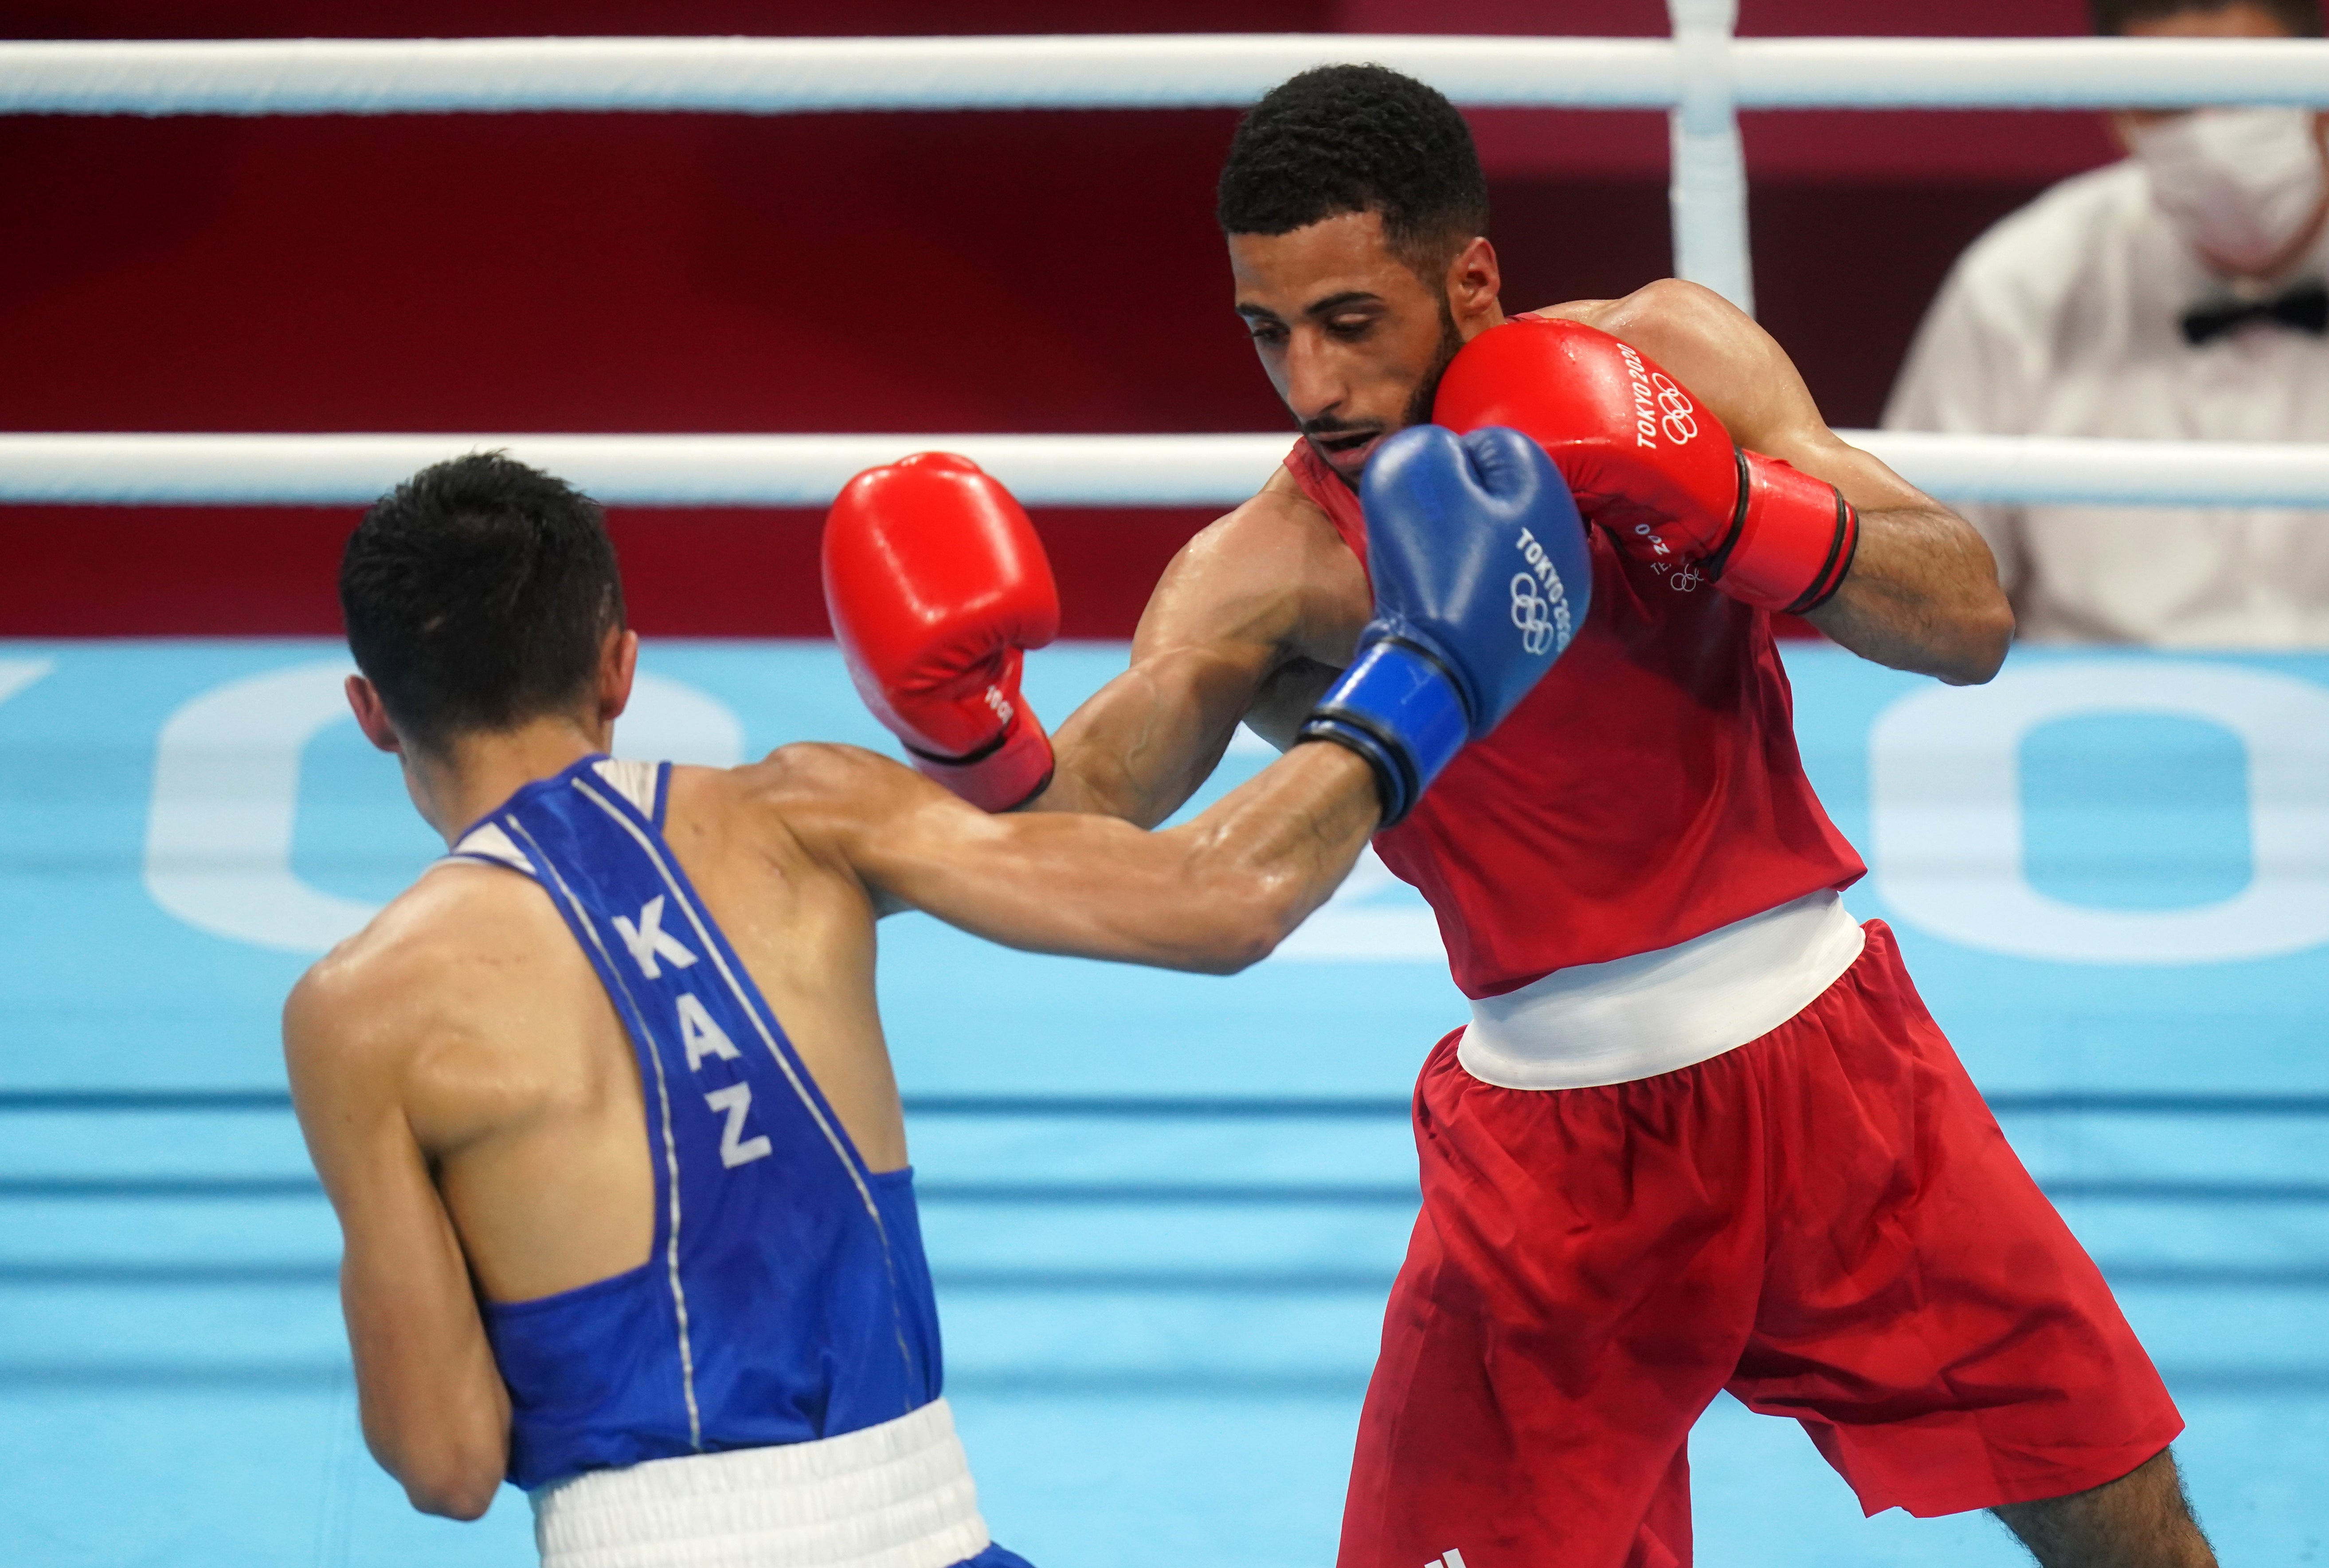 Yafai beat Kazakhstan’s Saken Bibossinov in the semi-final